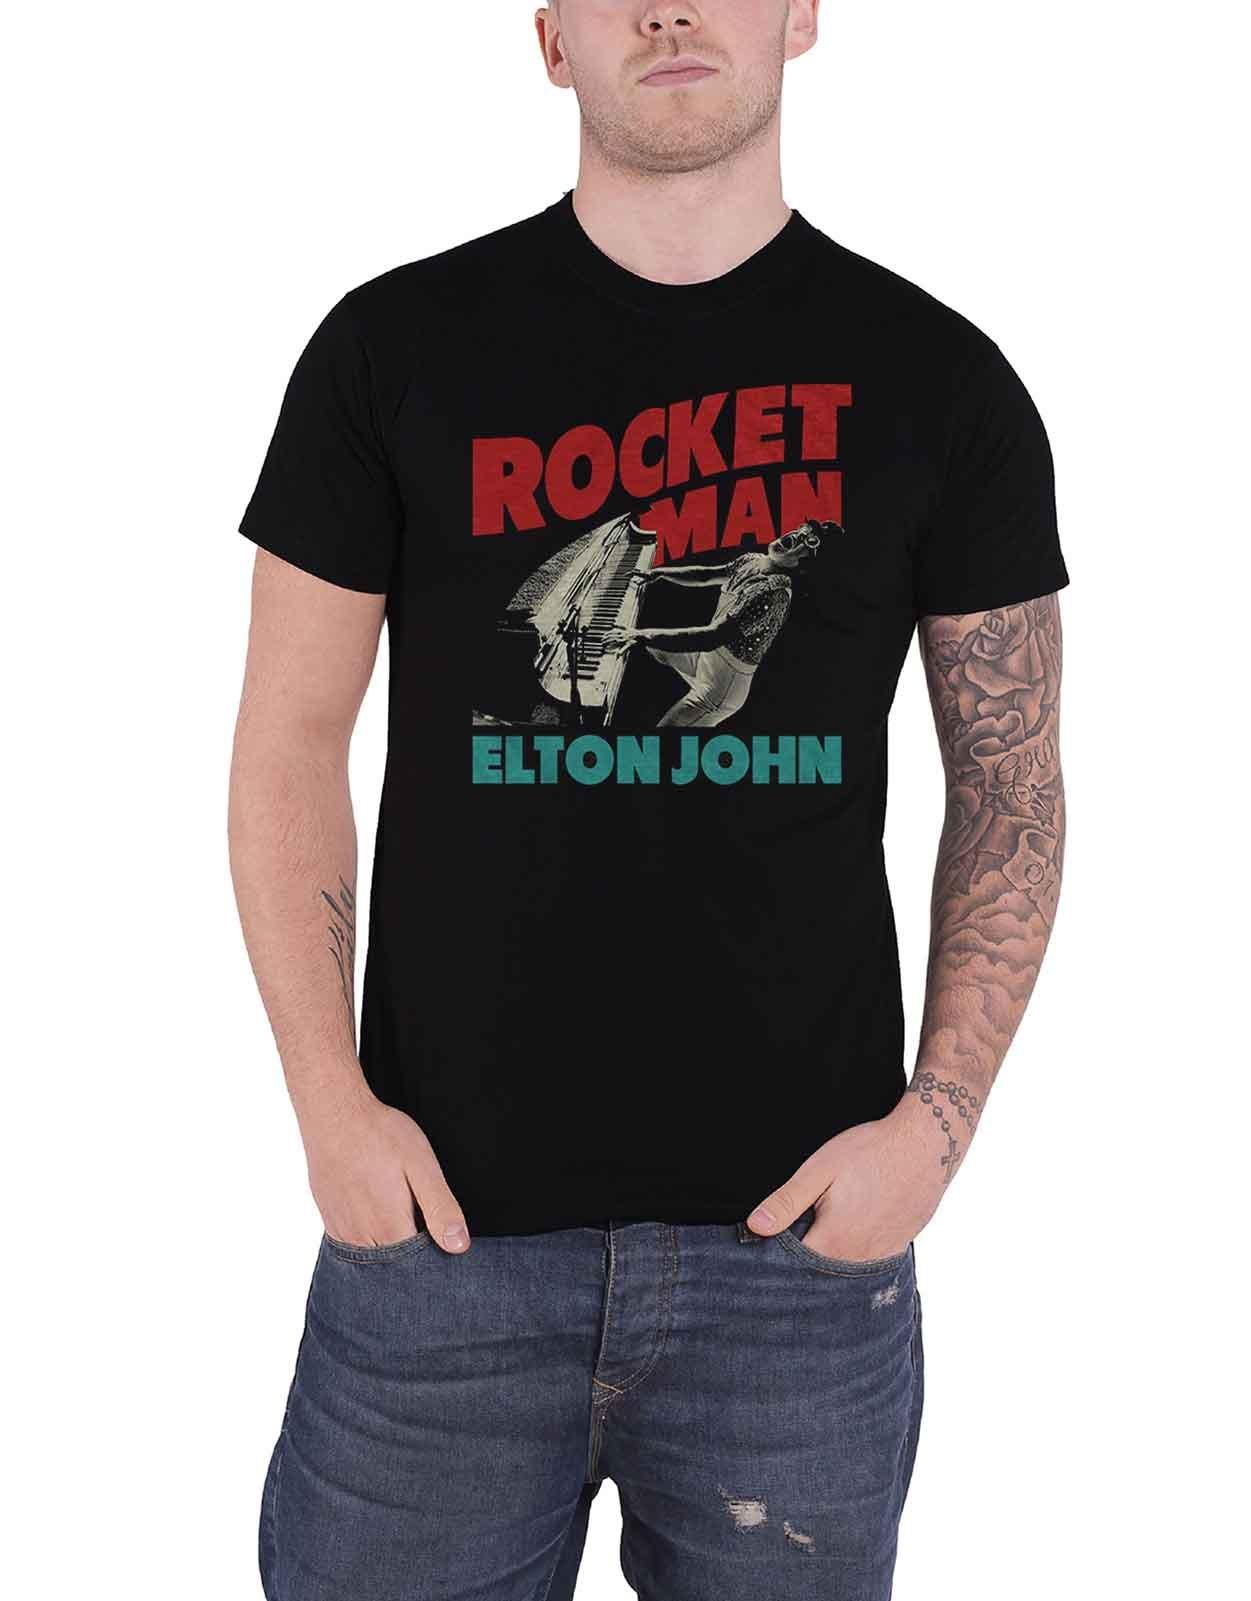 Футболка Rocketman Piano Elton John, черный футболка rocketman piano elton john черный